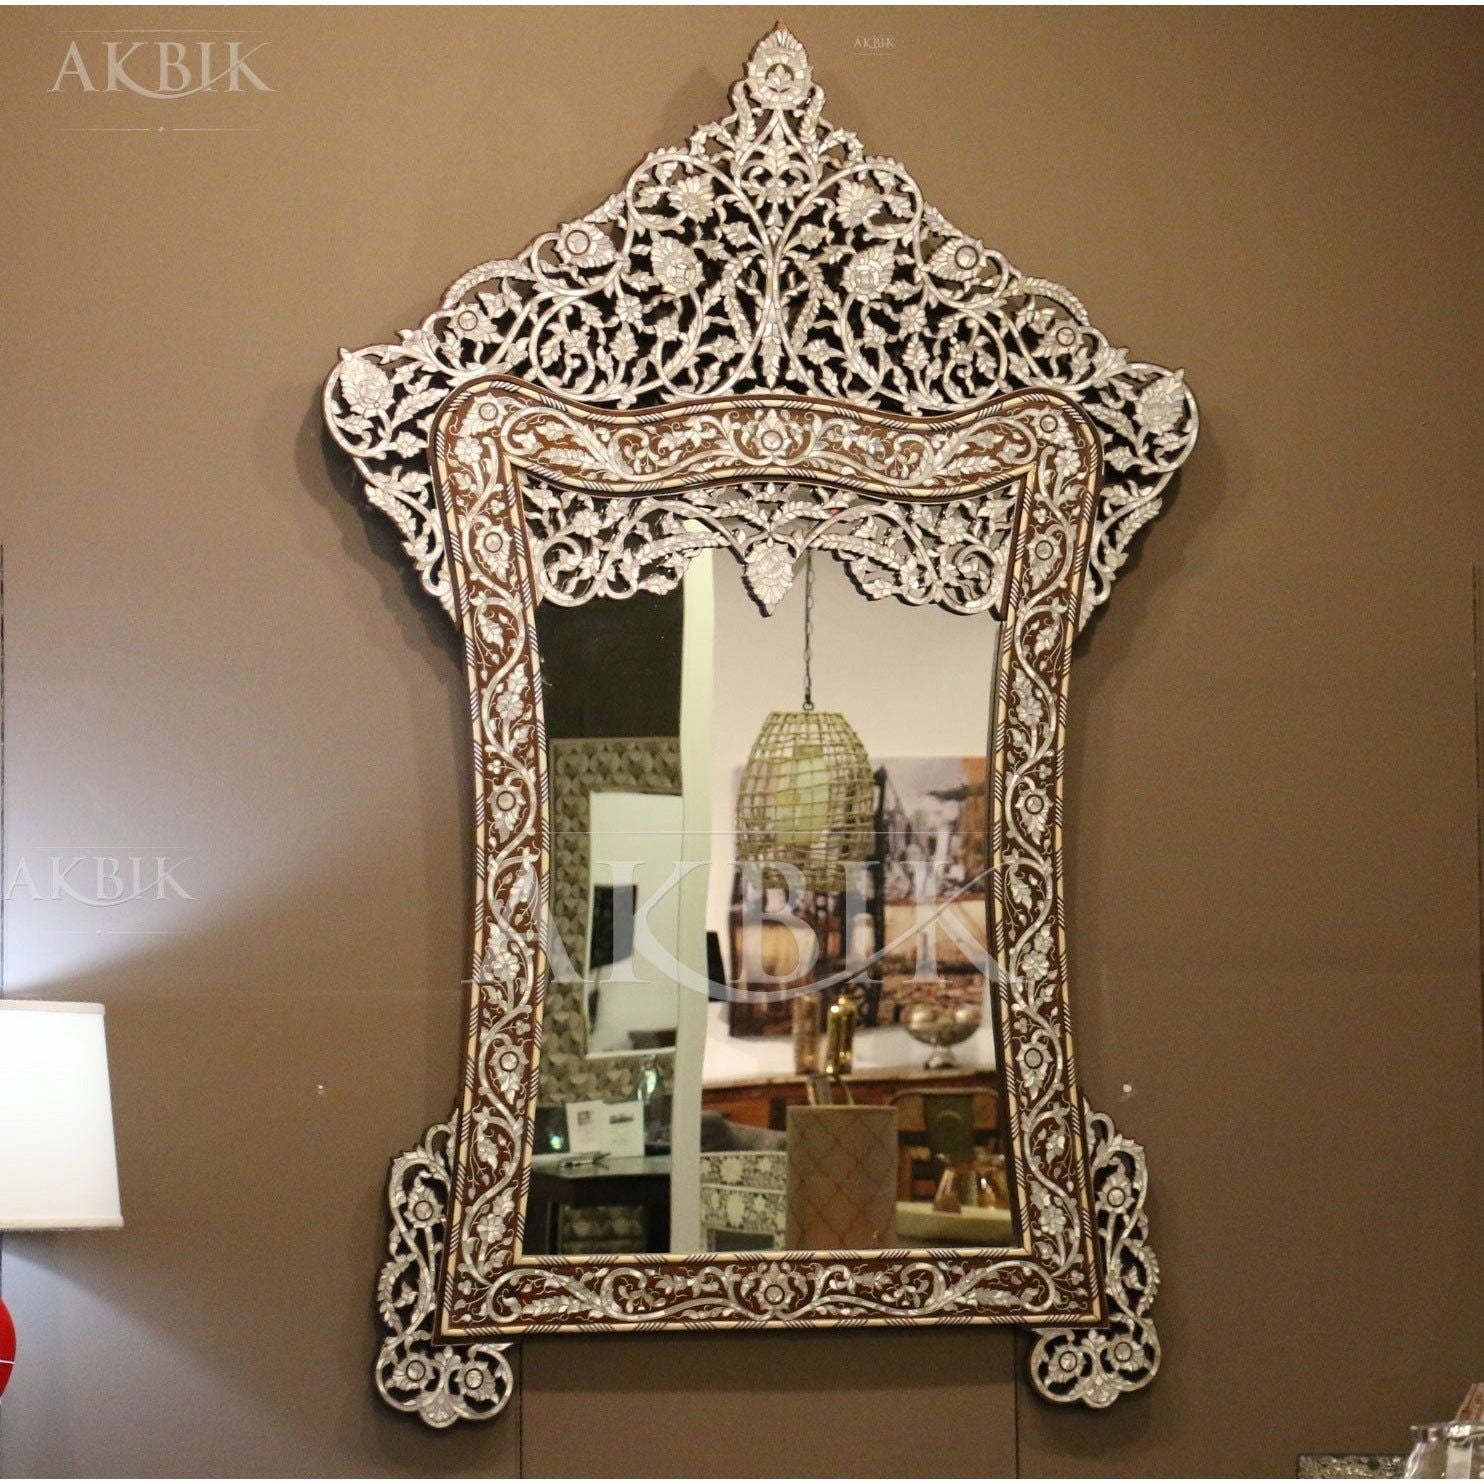 SECRET BEAUTY MIRROR - AKBIK Furniture & Design